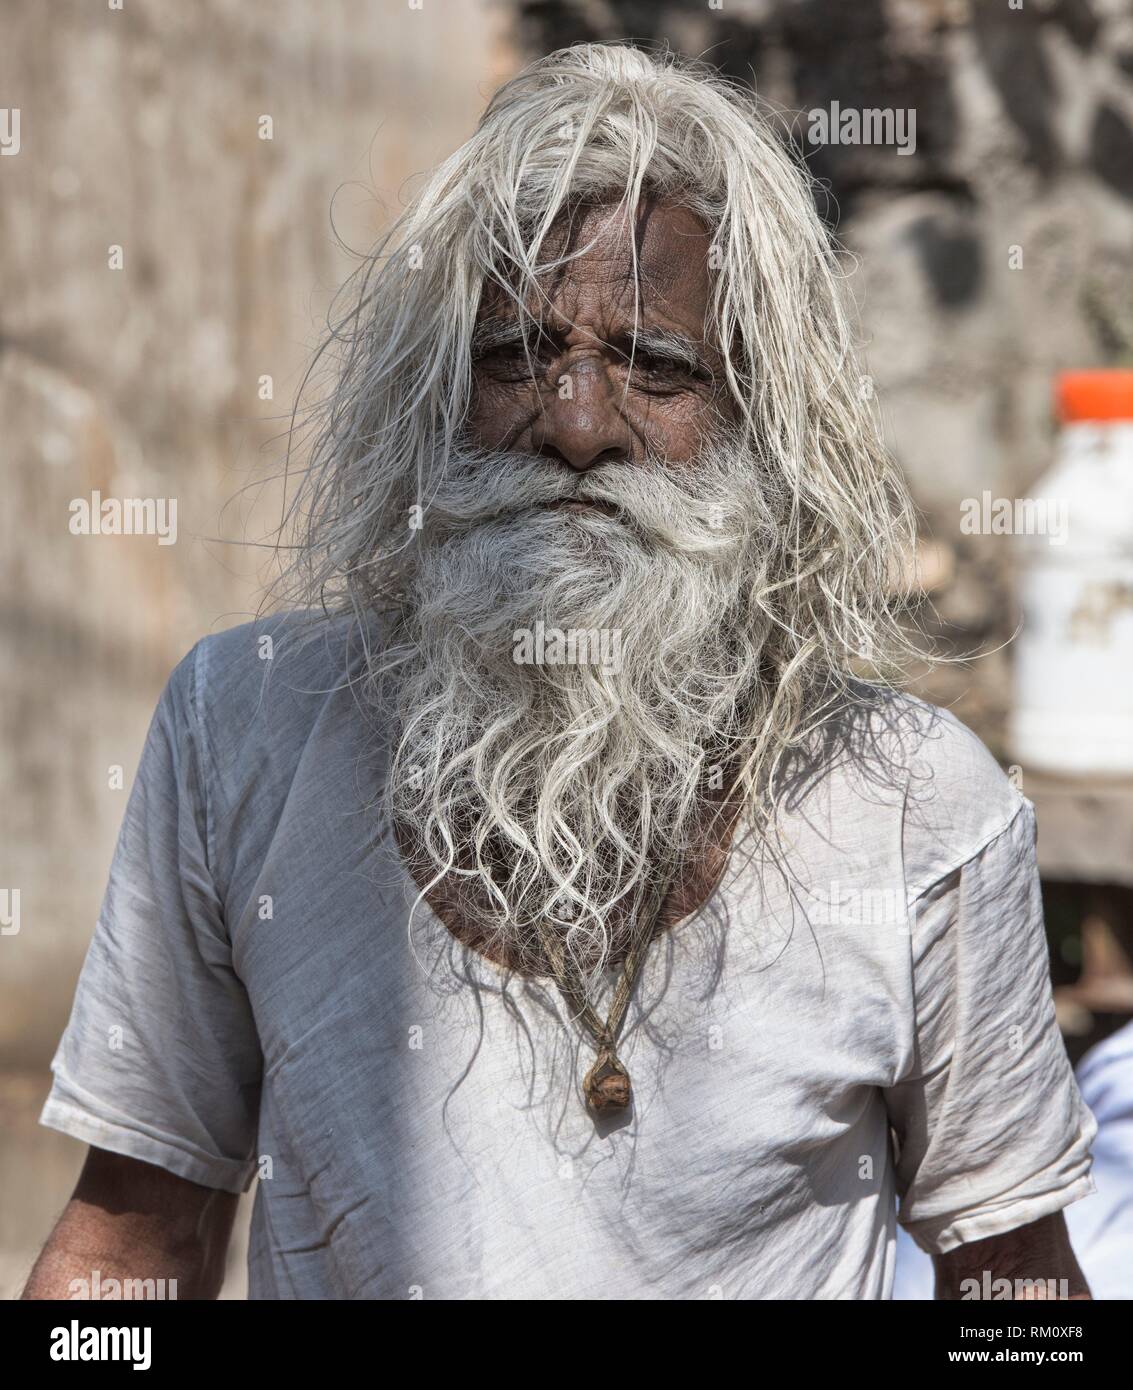 Old baba with white hair and beard, Pushkar, Rajasthan, India. Stock Photo